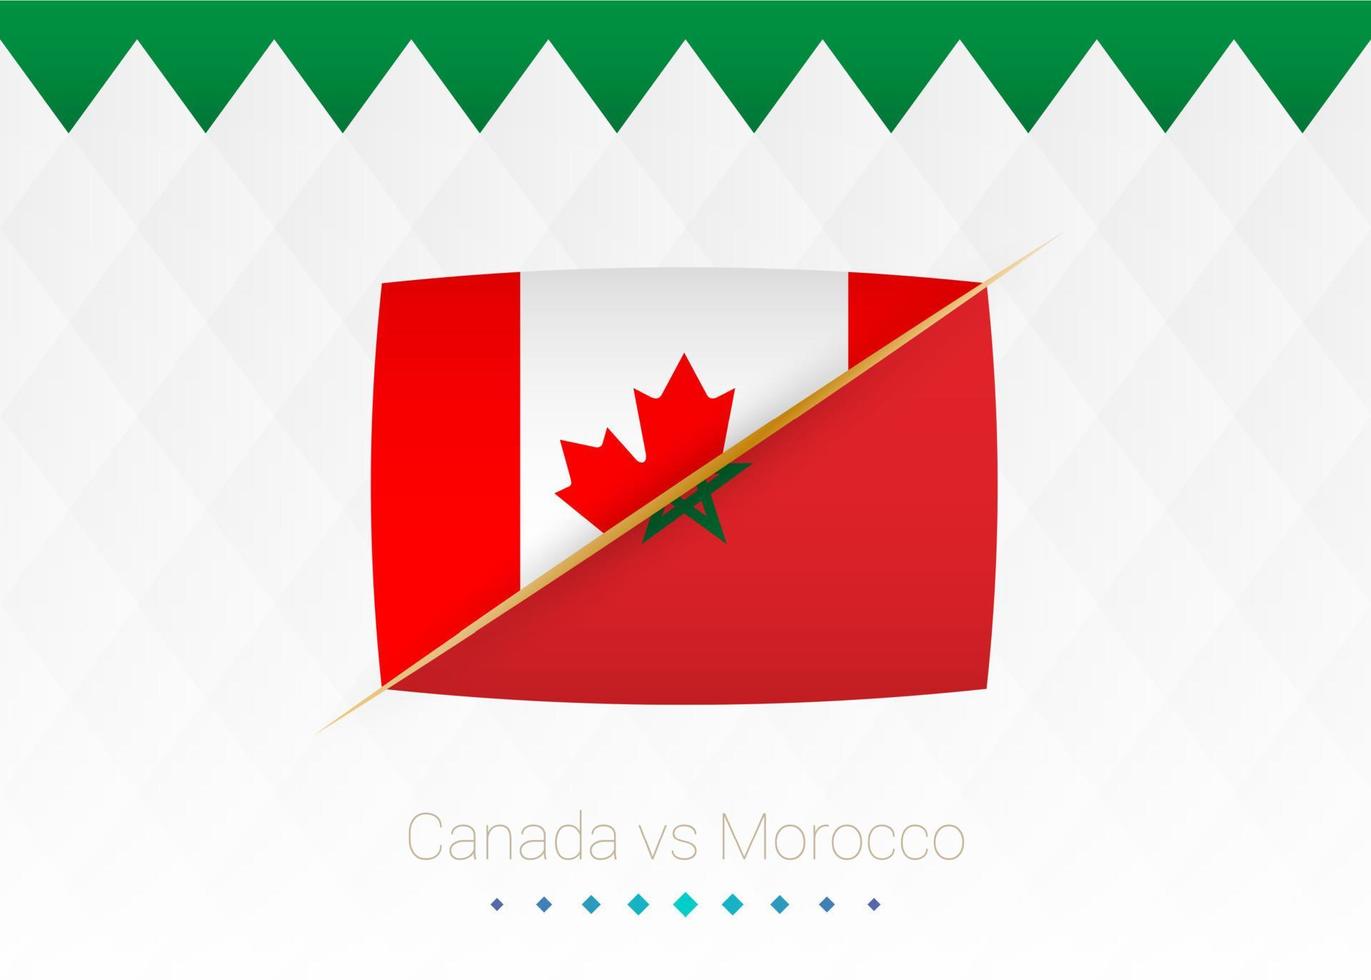 National football team Canada vs Morocco. Soccer 2022 match versus icon. vector